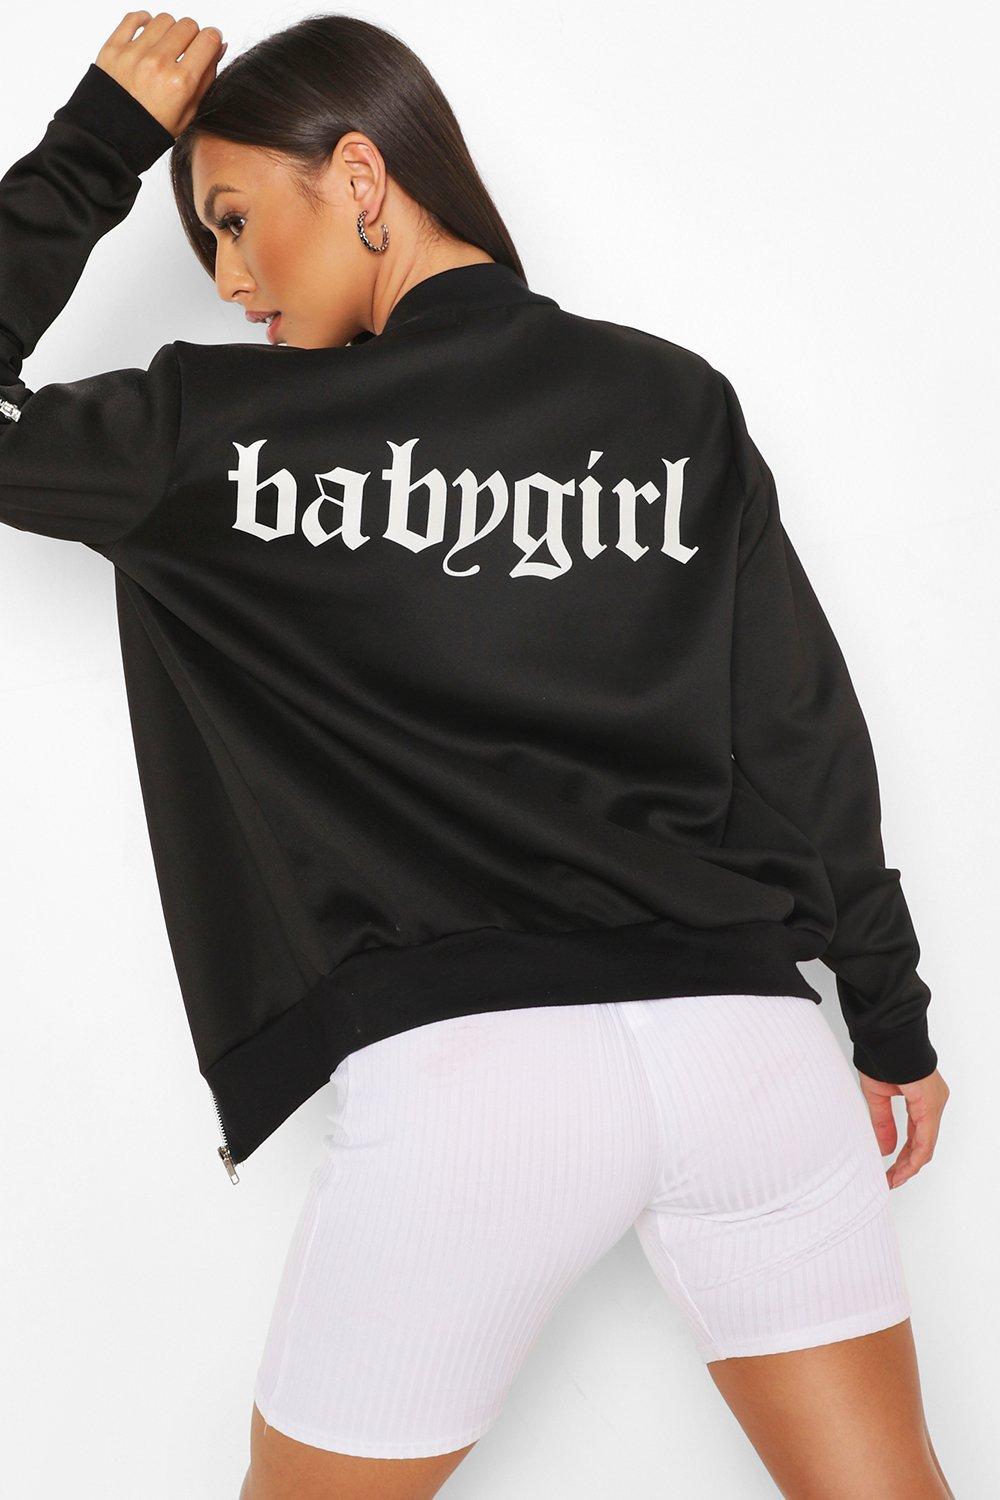 jacket that says baby girl